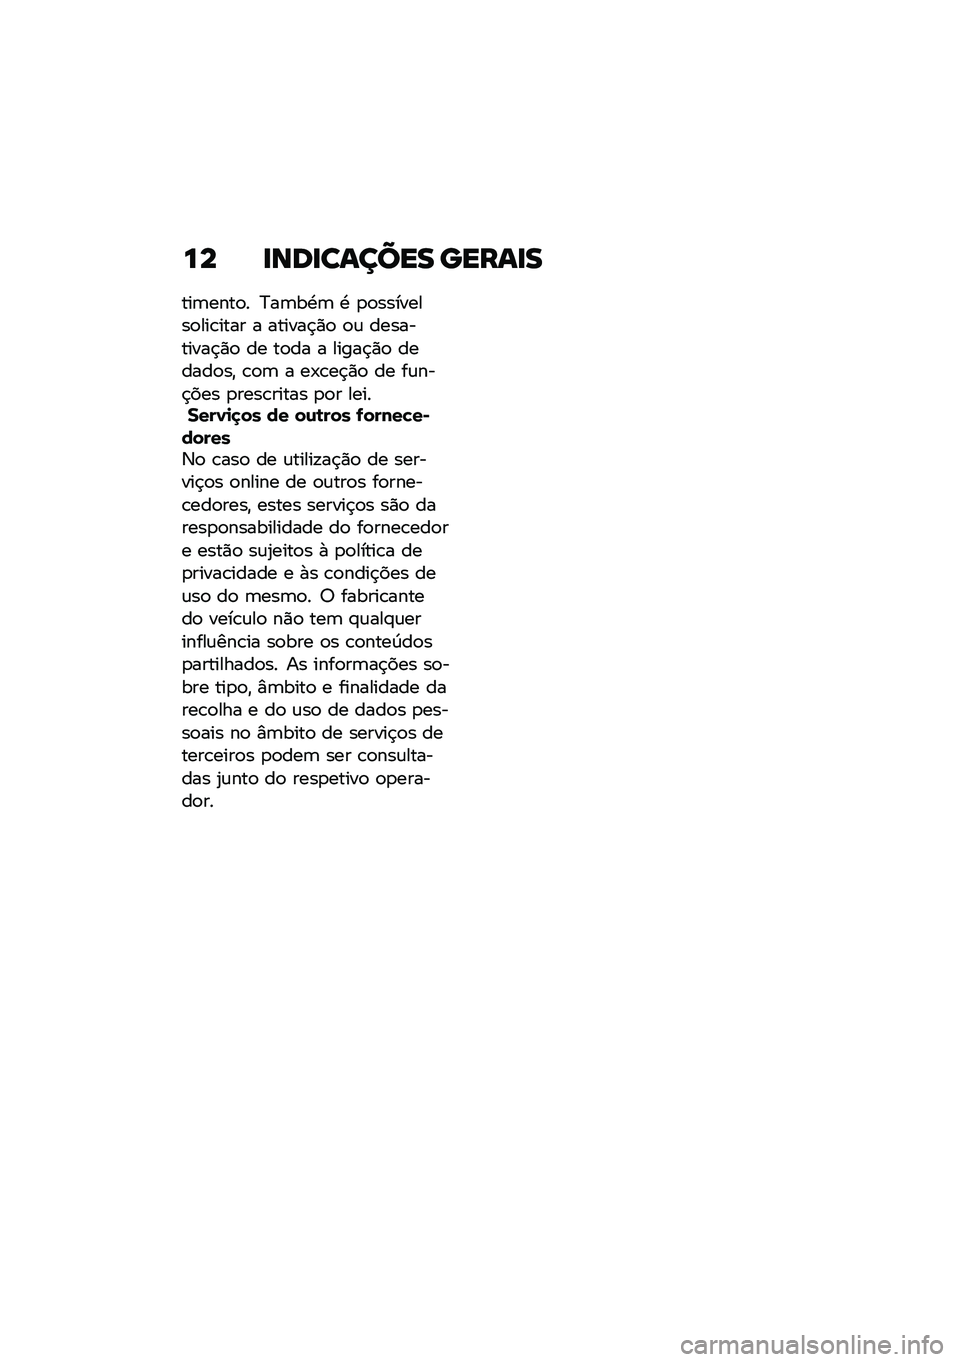 BMW MOTORRAD C 400 GT 2020  Manual do condutor (in Portuguese) �� �
���
������ �����
�
���	����
� �C��	��.�	 �. �
�
��������
���\b���� � ������$�)�
 �
�\f ����������$�)�
 �� ��
�� � �����$�)�
 �����